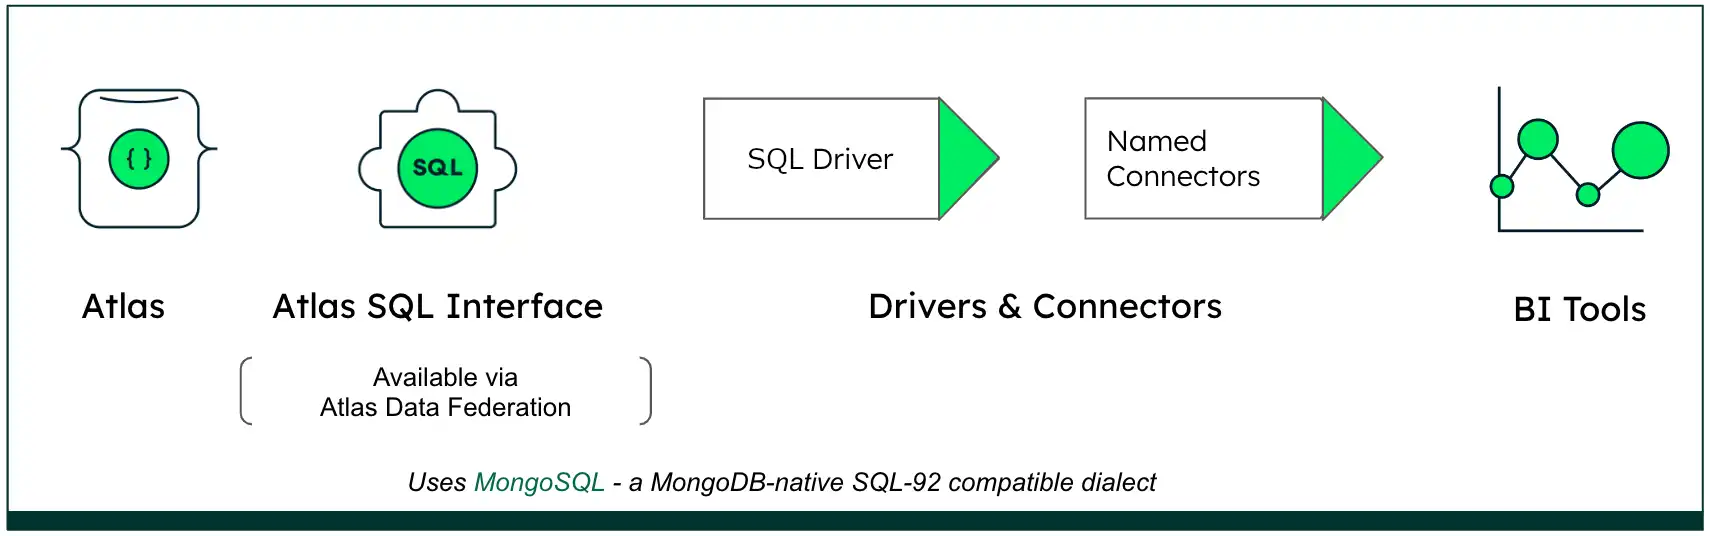 MongoDB Atlas SQLquery 流程图